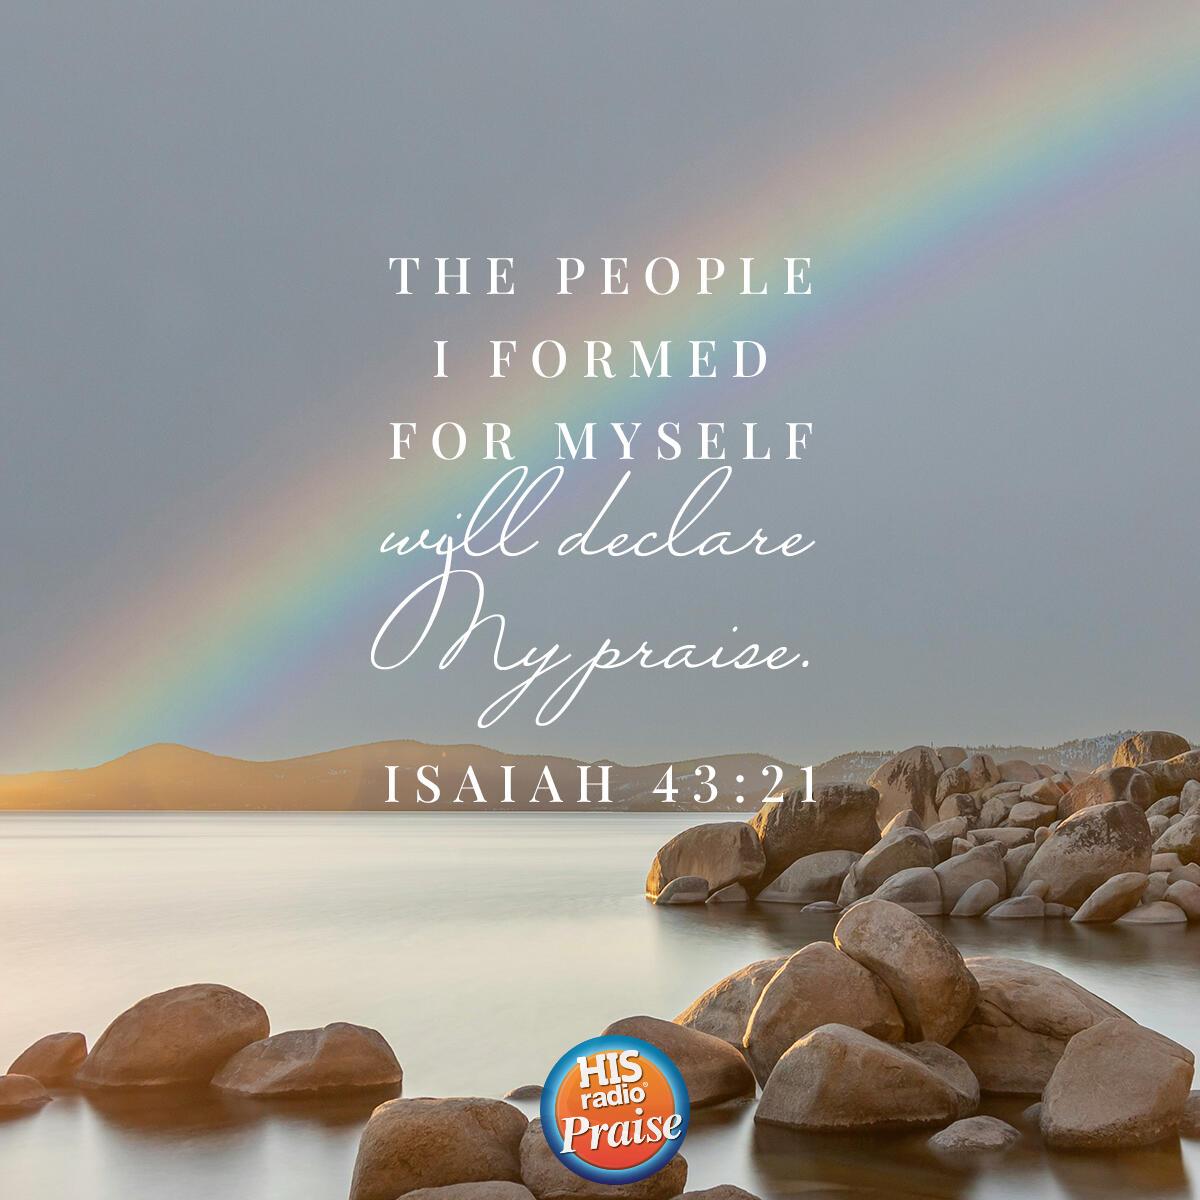 Isaiah 43:21